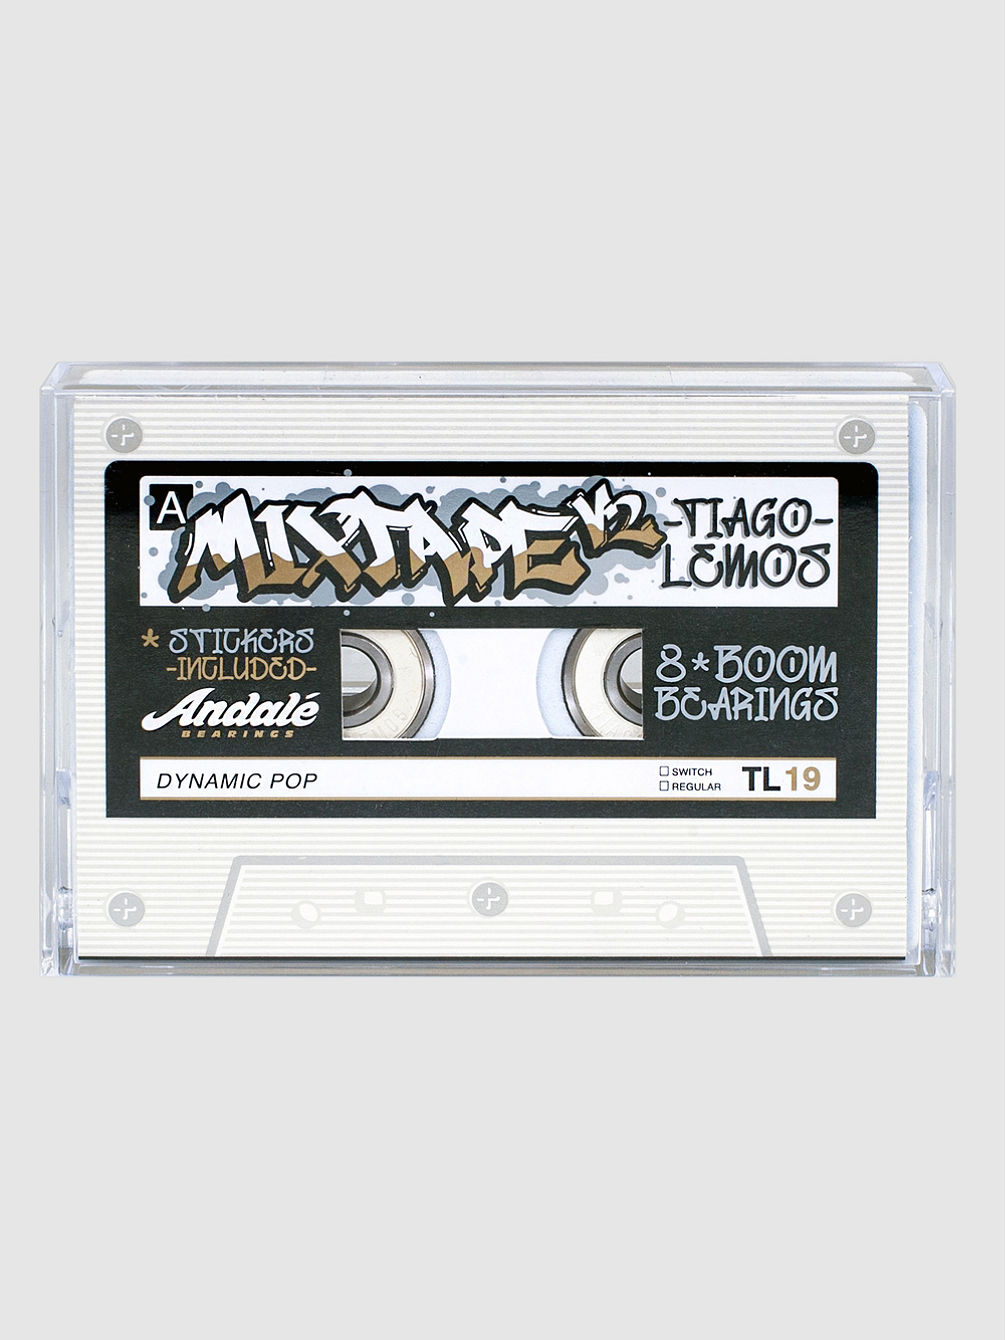 Tiago Mixtape Volume 2 Lagers